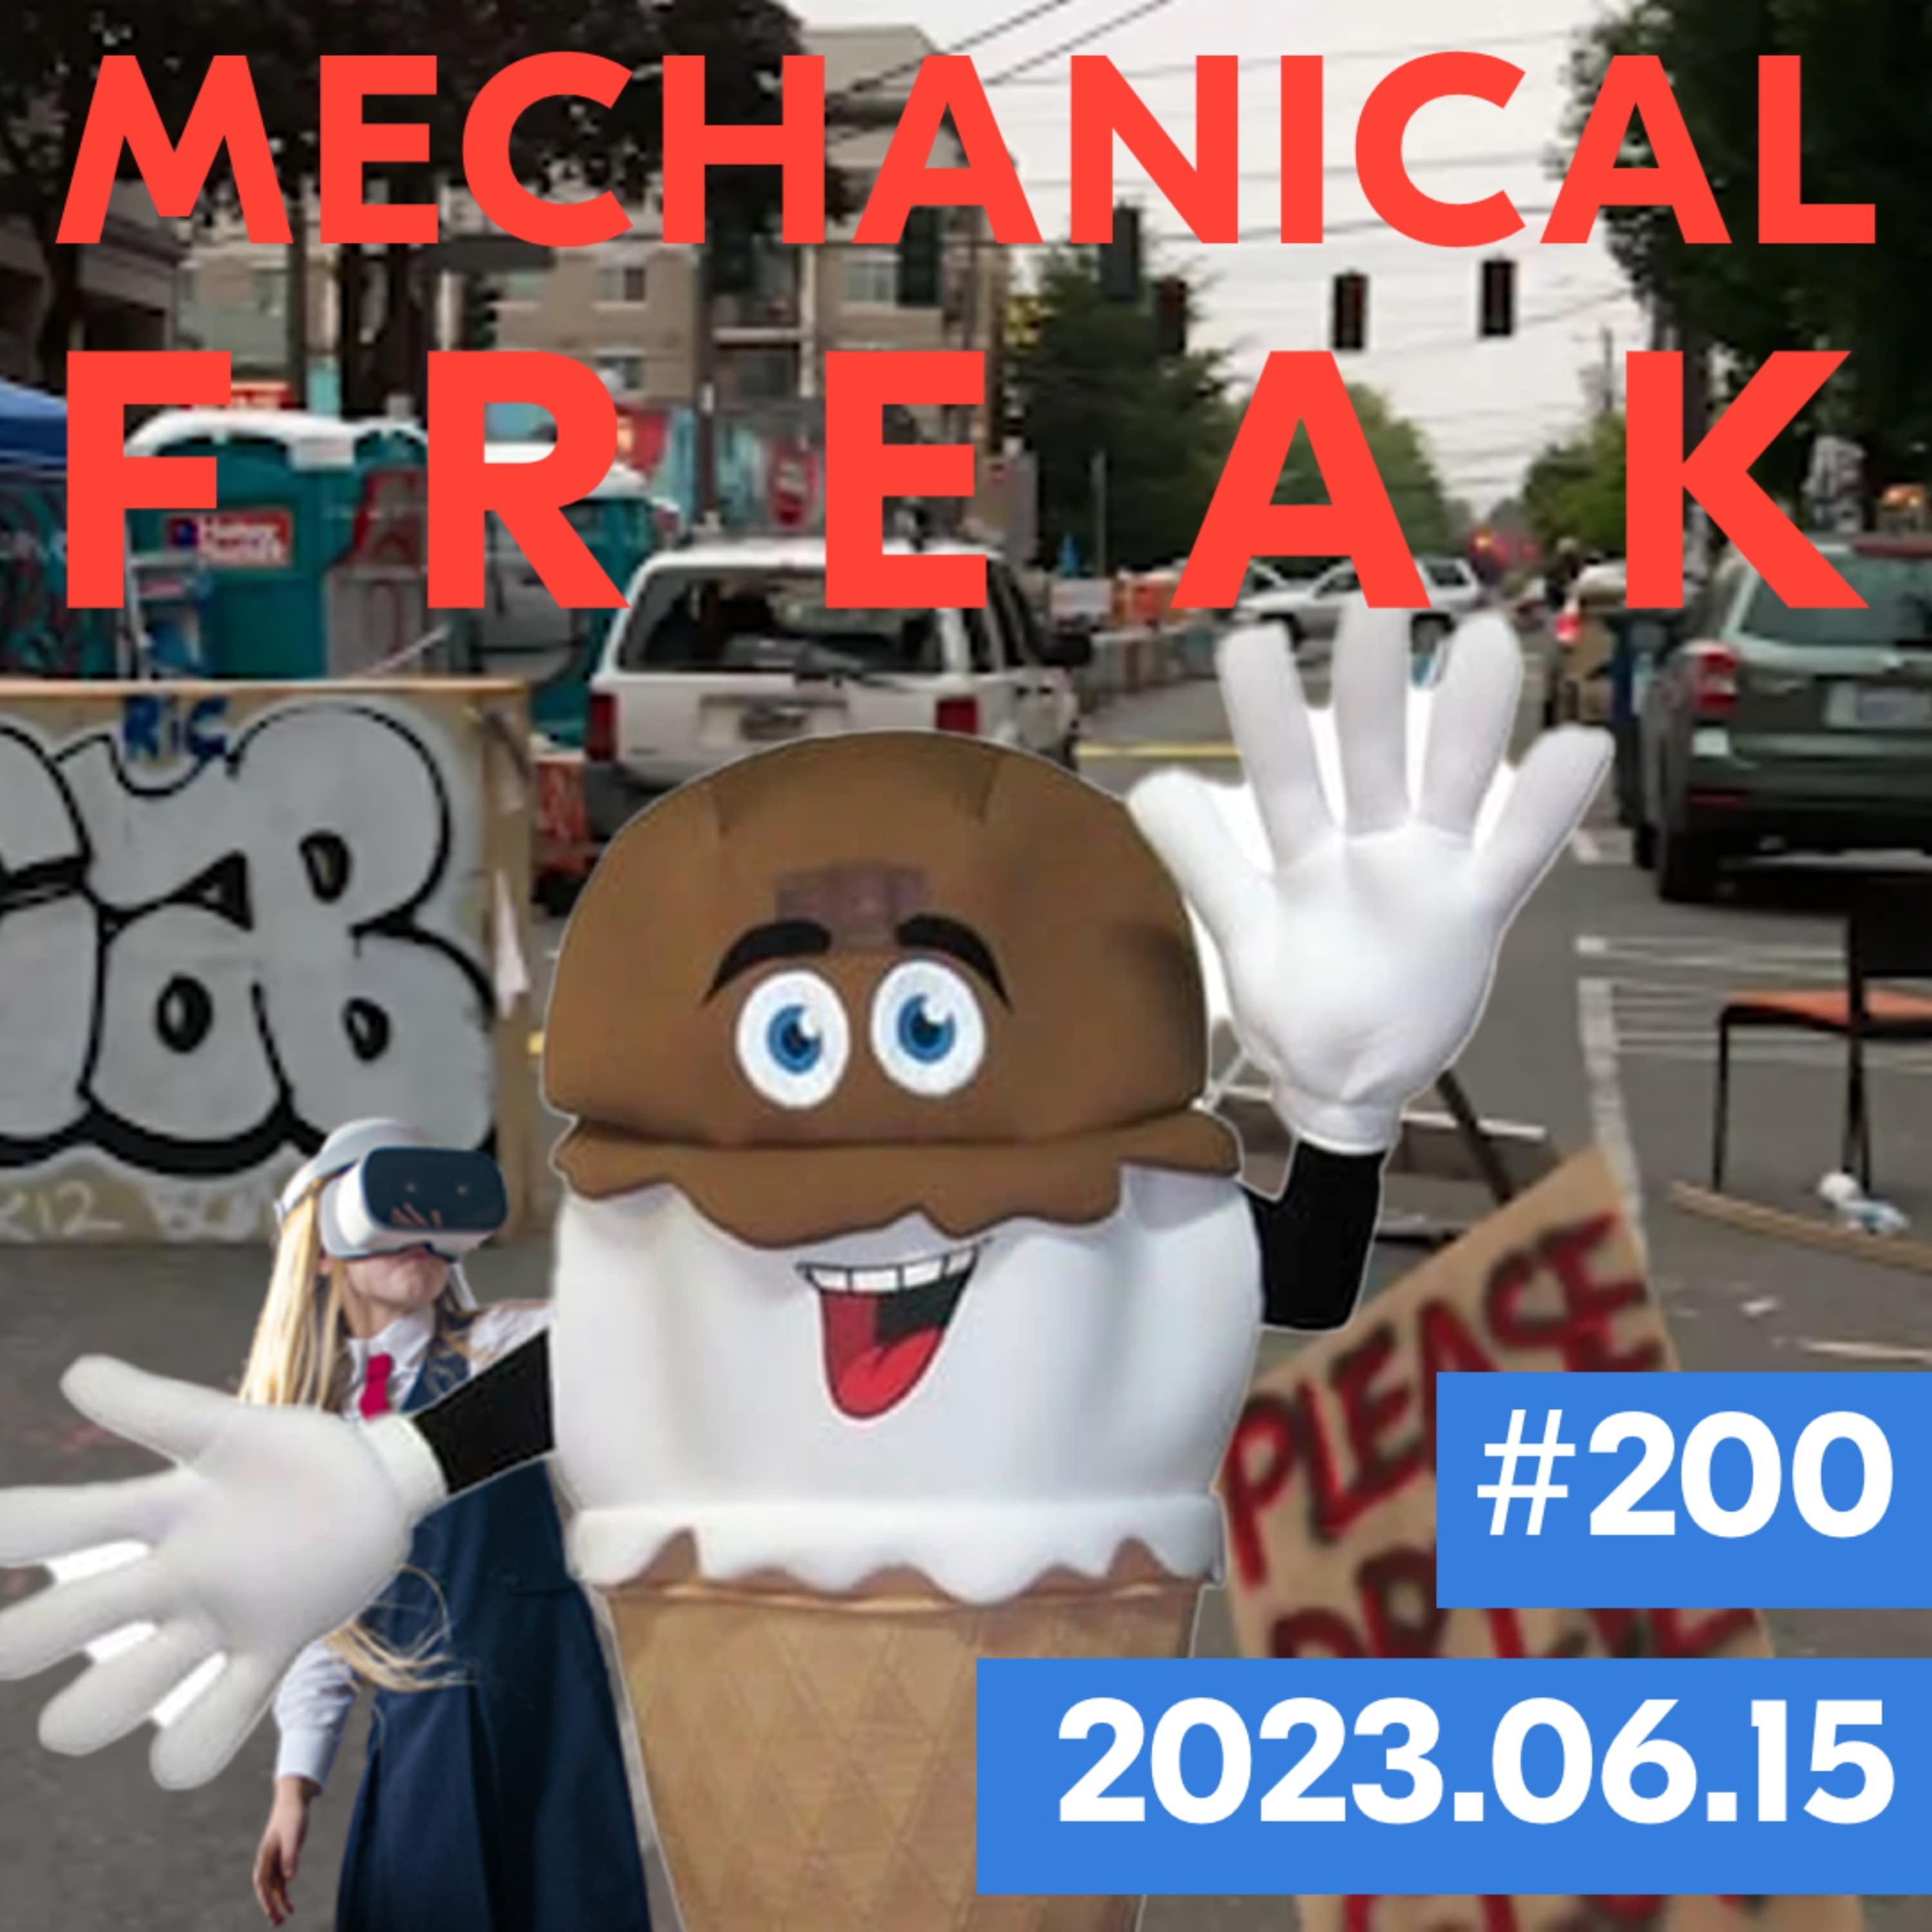 Episode #mechanical-freak-200 cover